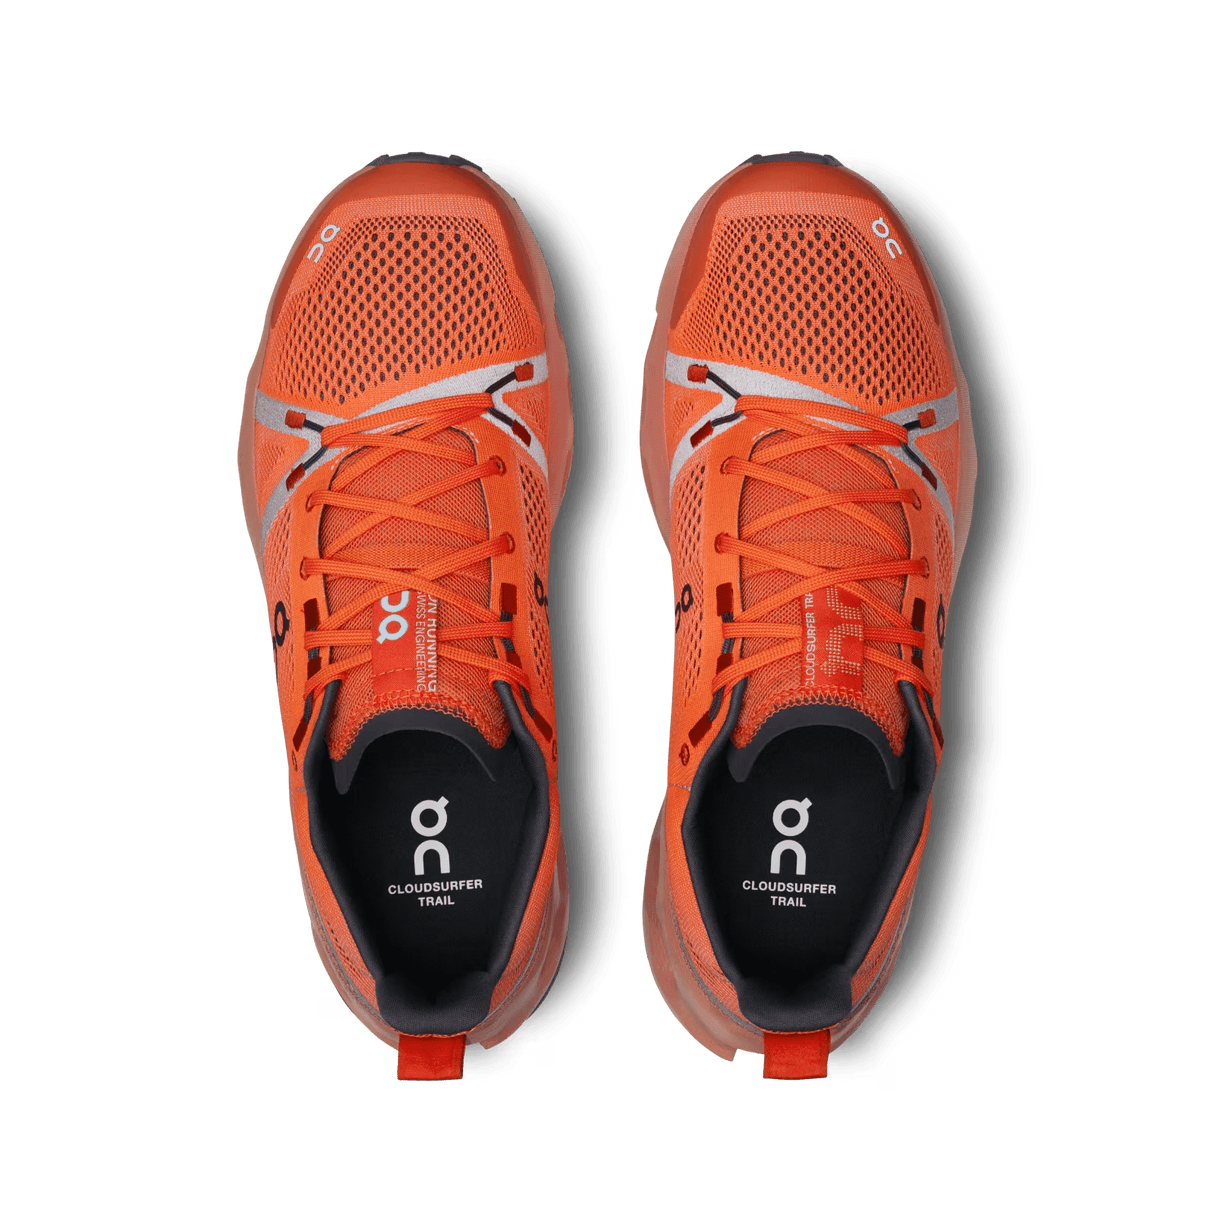 On Men's Cloudsurfer Trail Running Shoes - Cam2